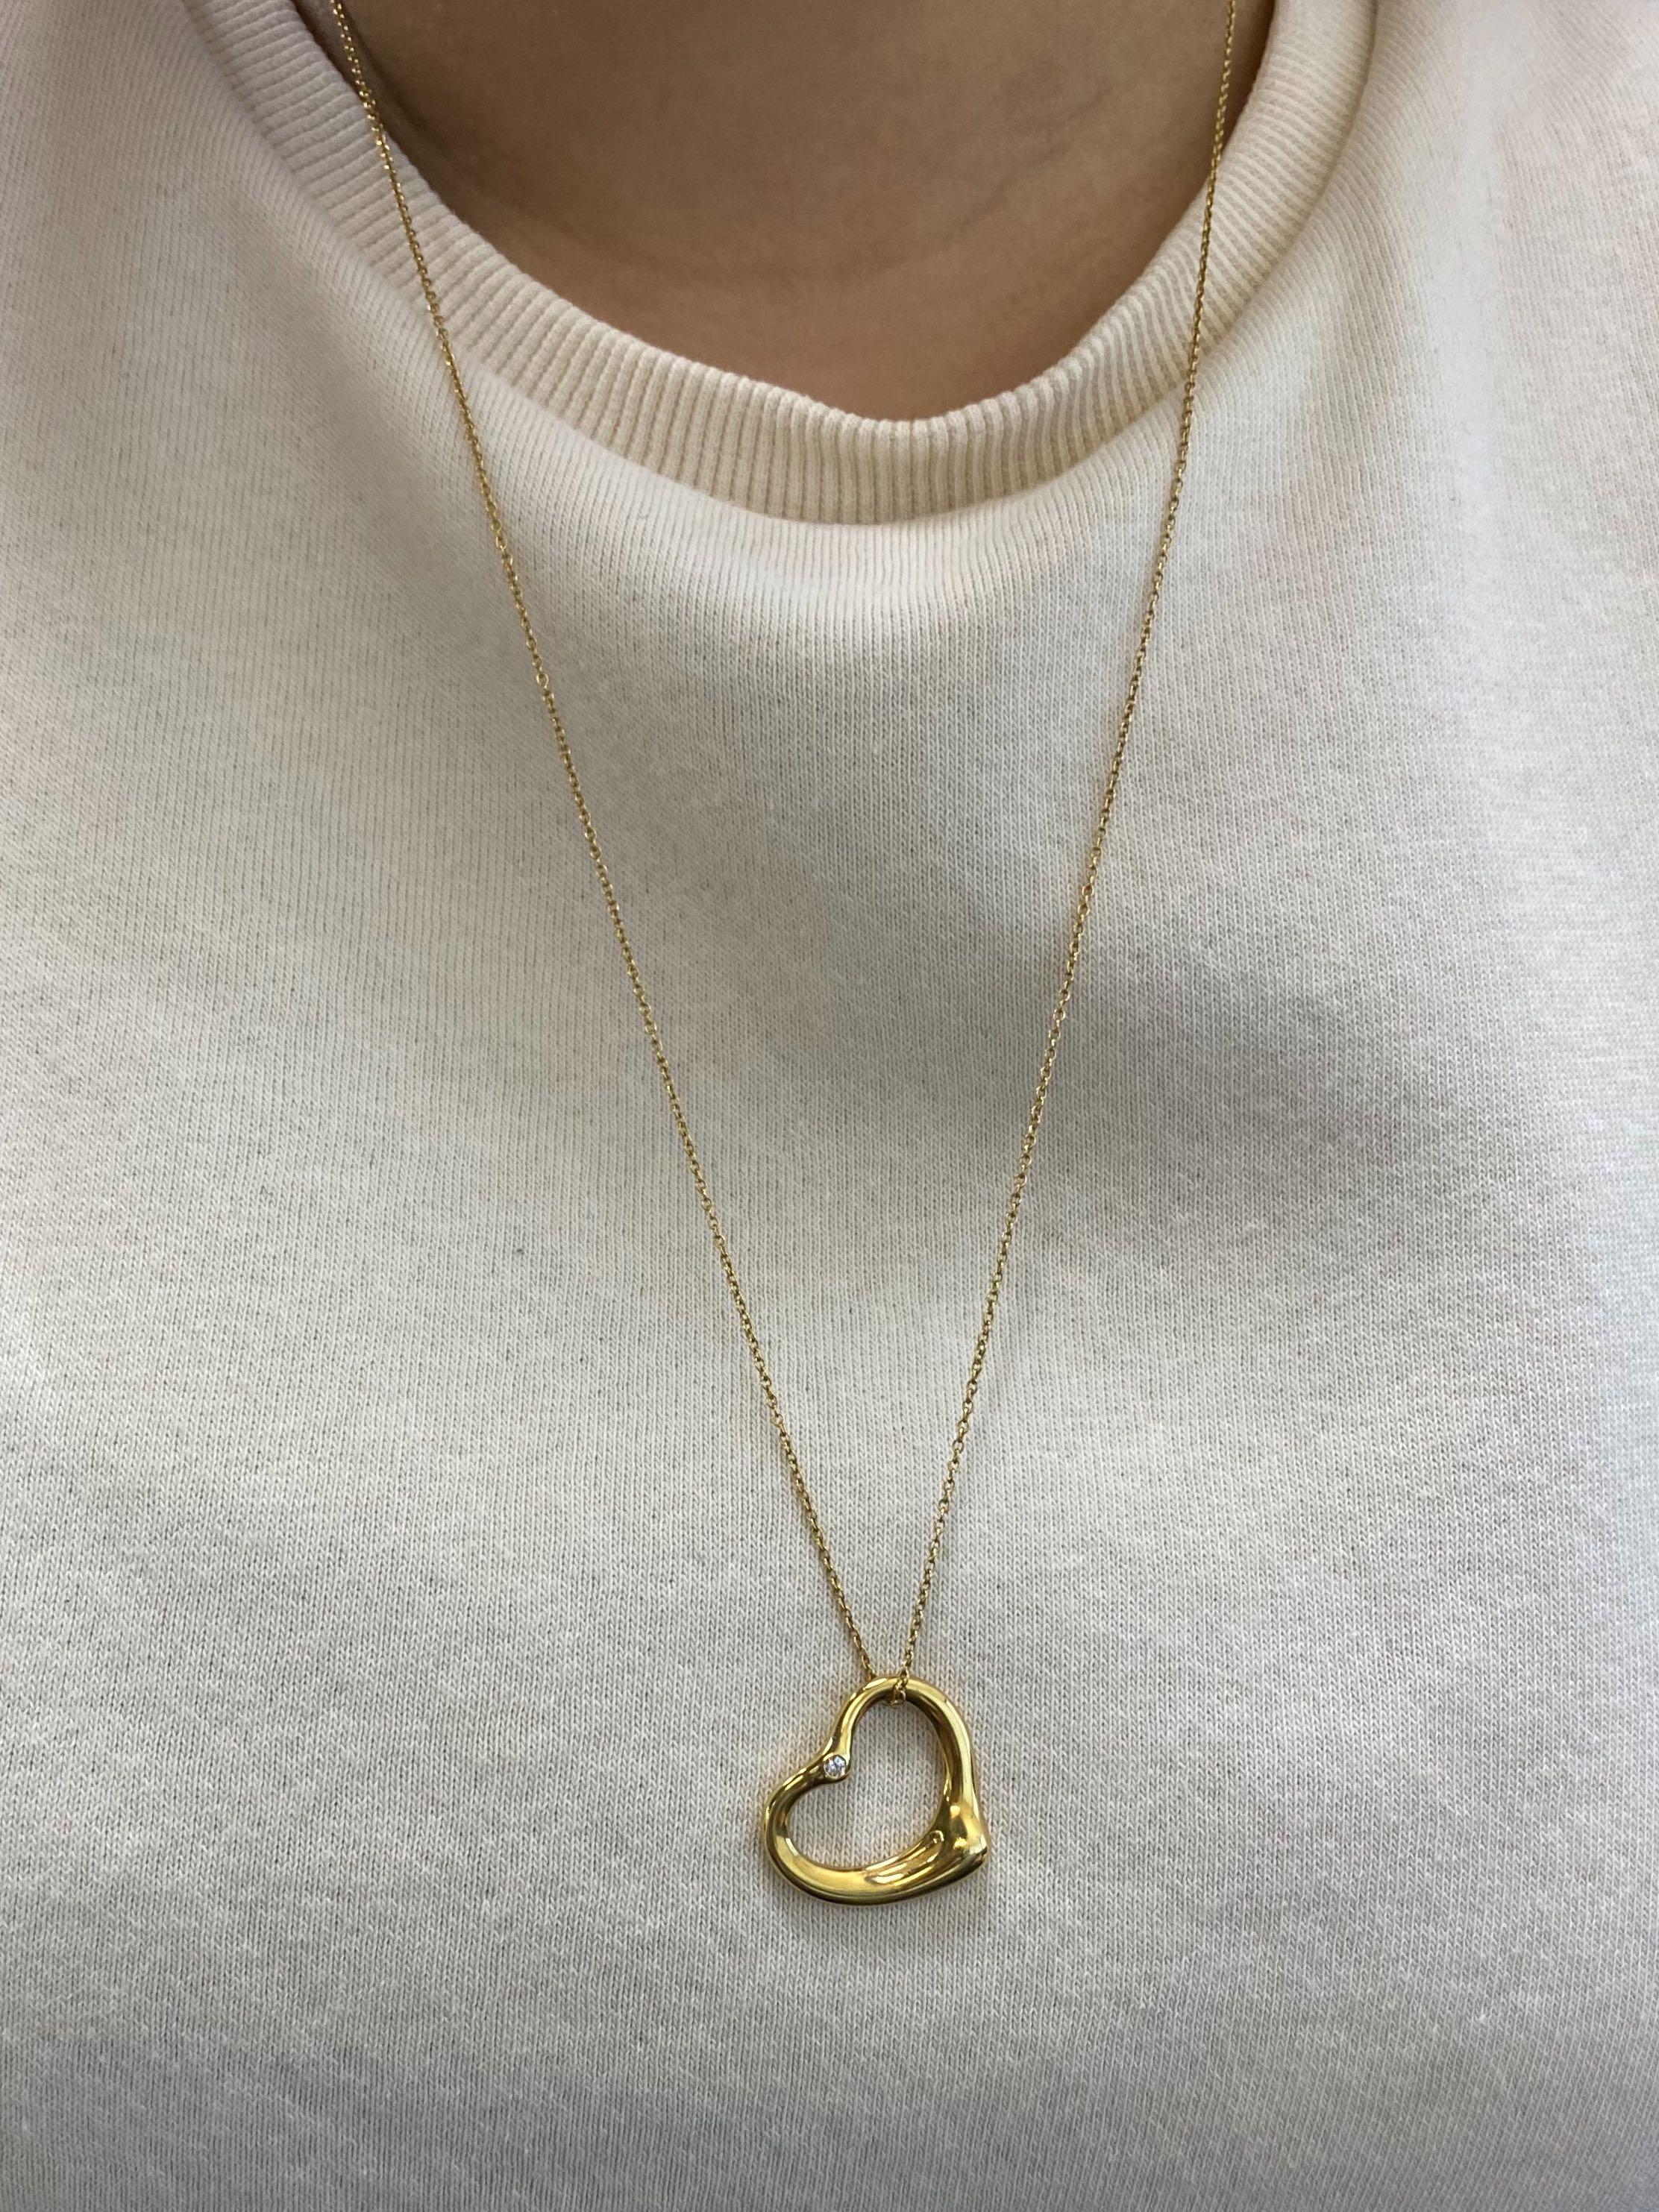 Tiffany & Co 18 Karat Gold Elsa Peretti Open Heart Pendant Necklace 0.04 Carat 2